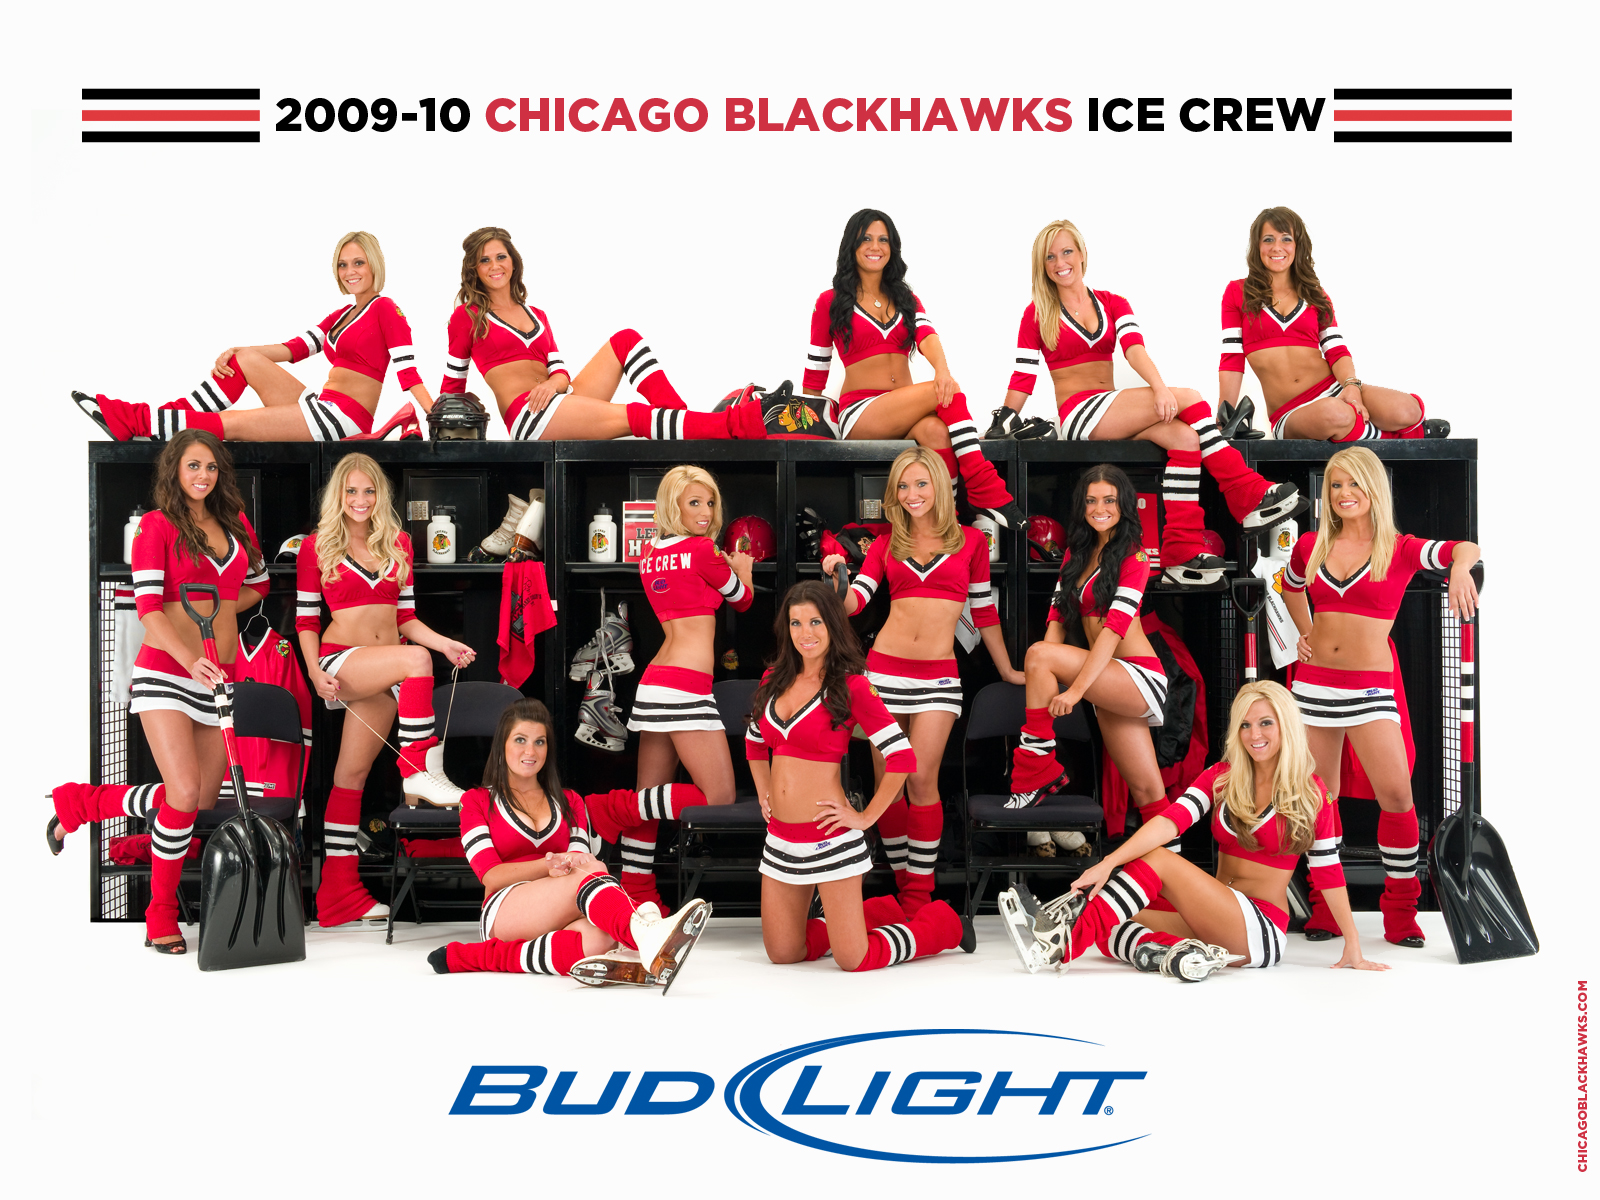 Thread Chicago Blackhawks Ice Crew